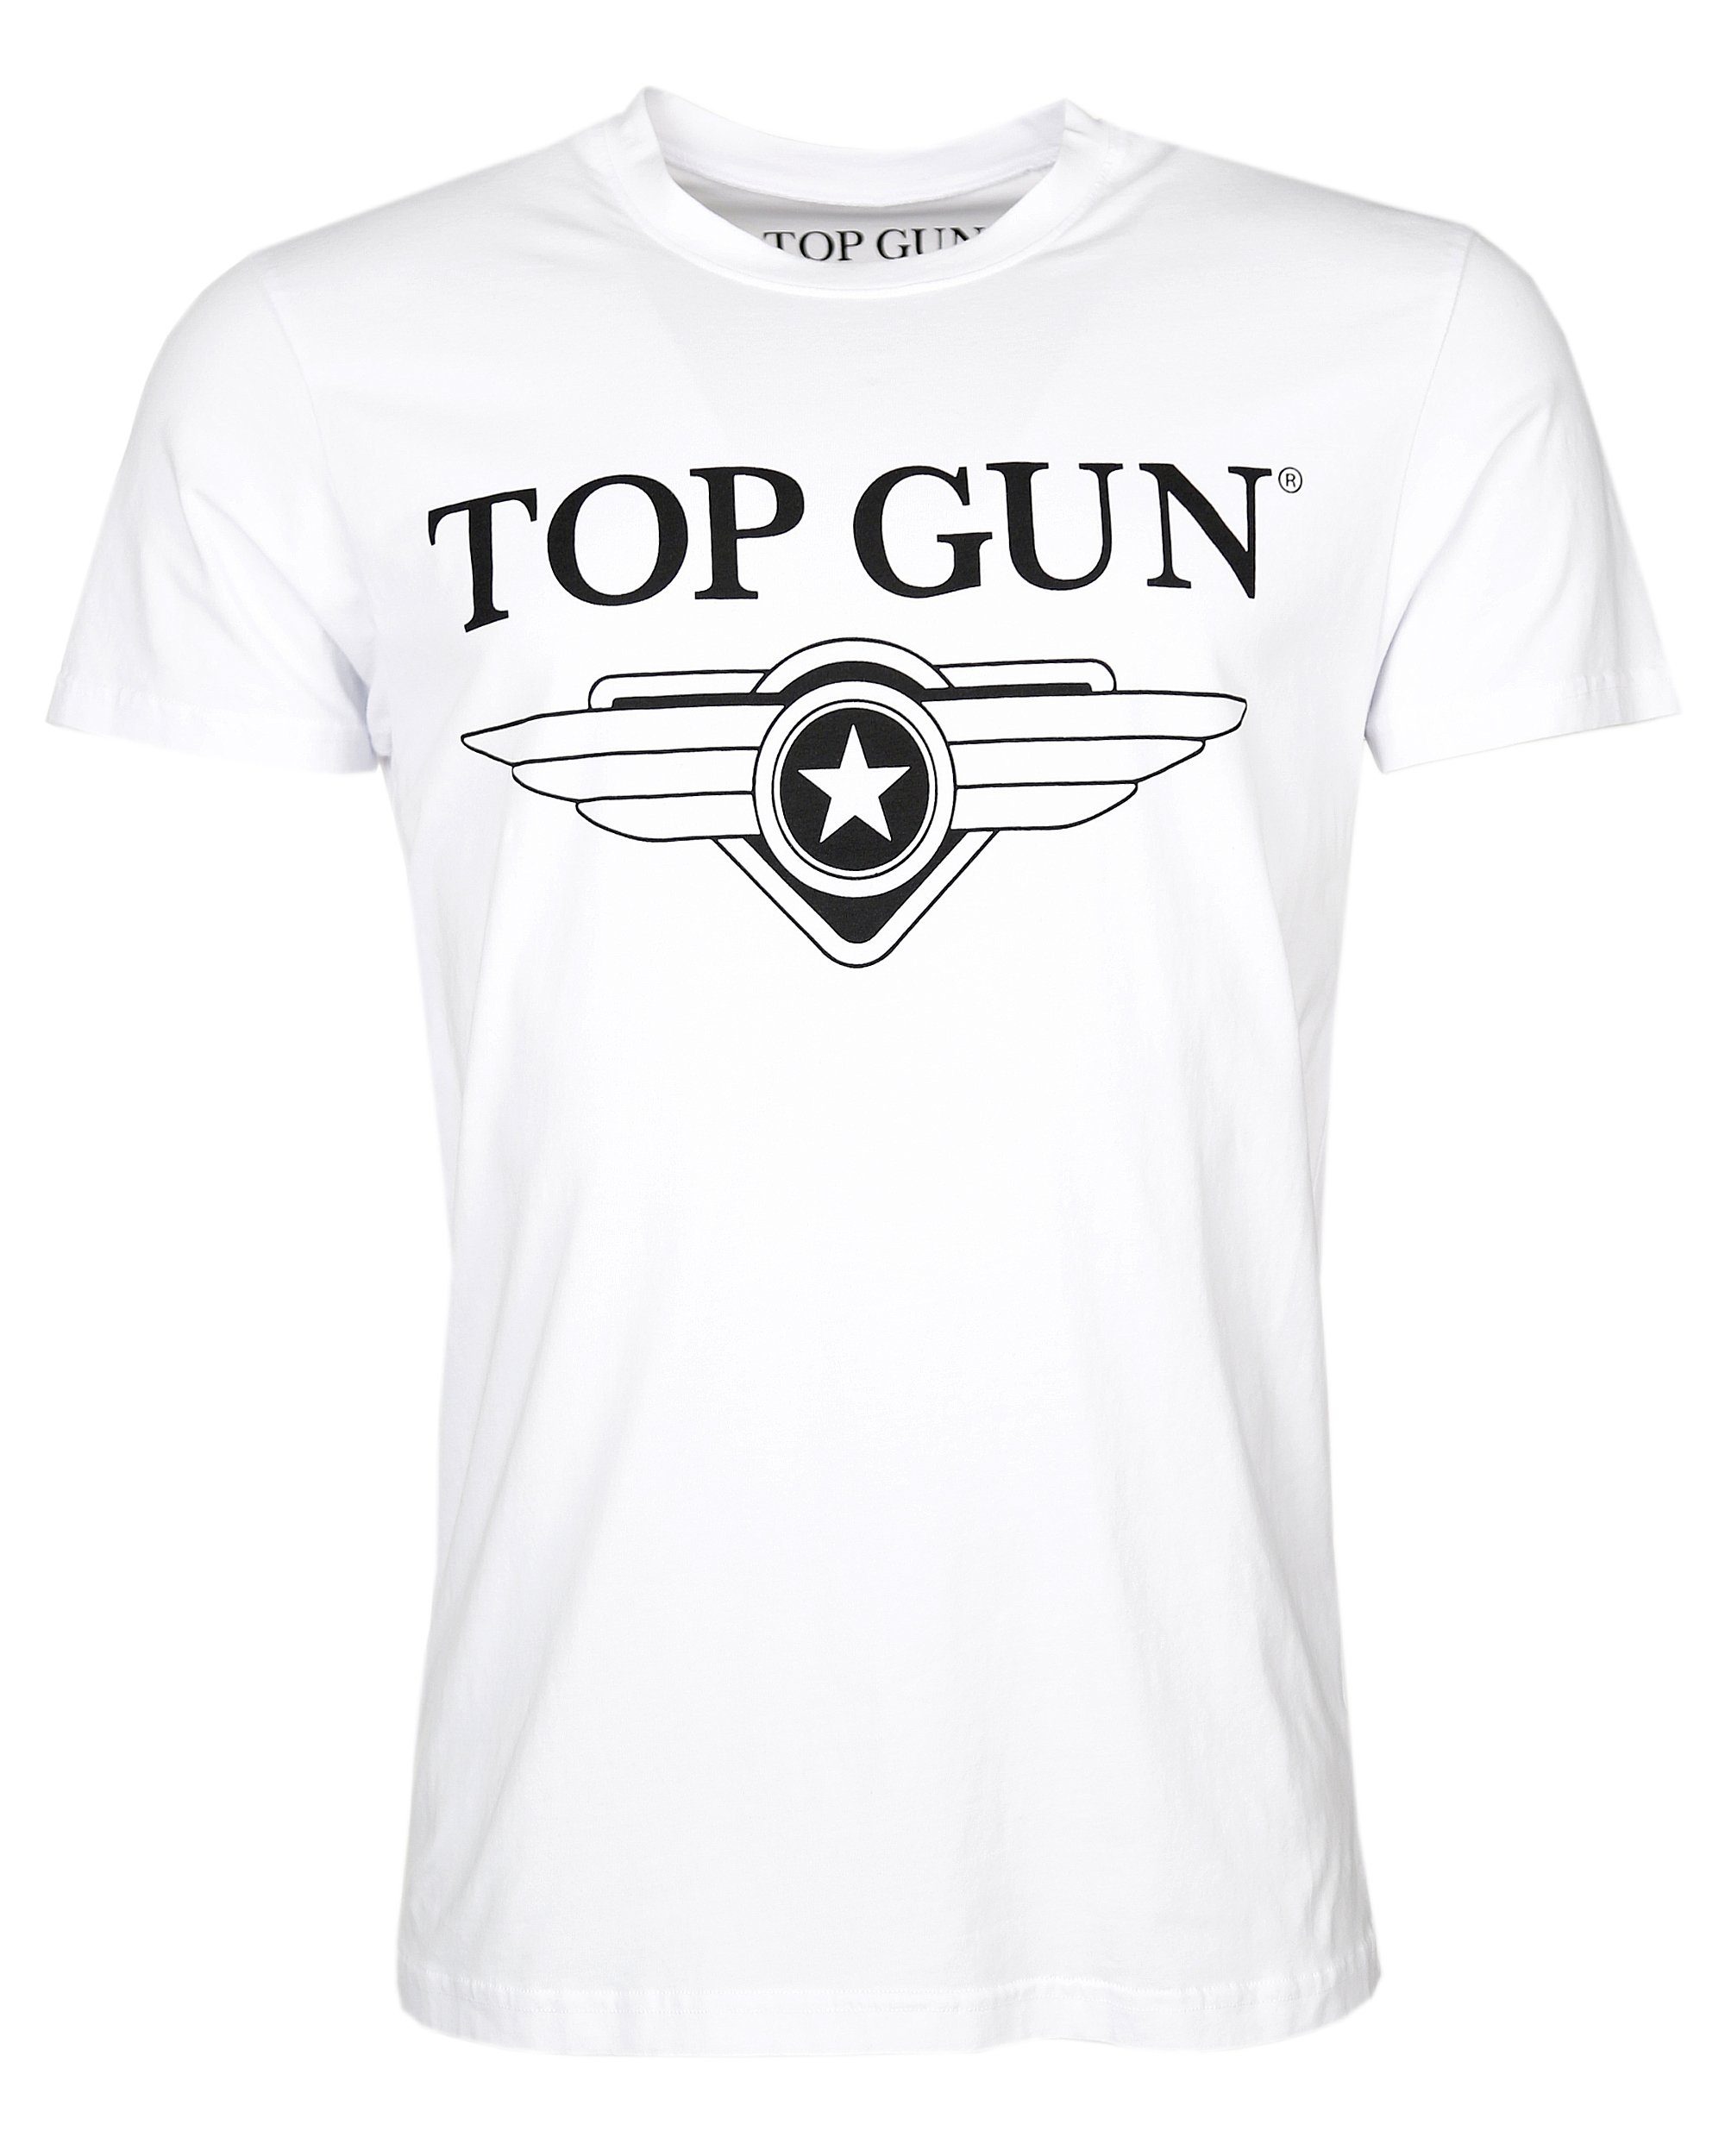 TG20191006 T-Shirt TOP GUN white Cloudy